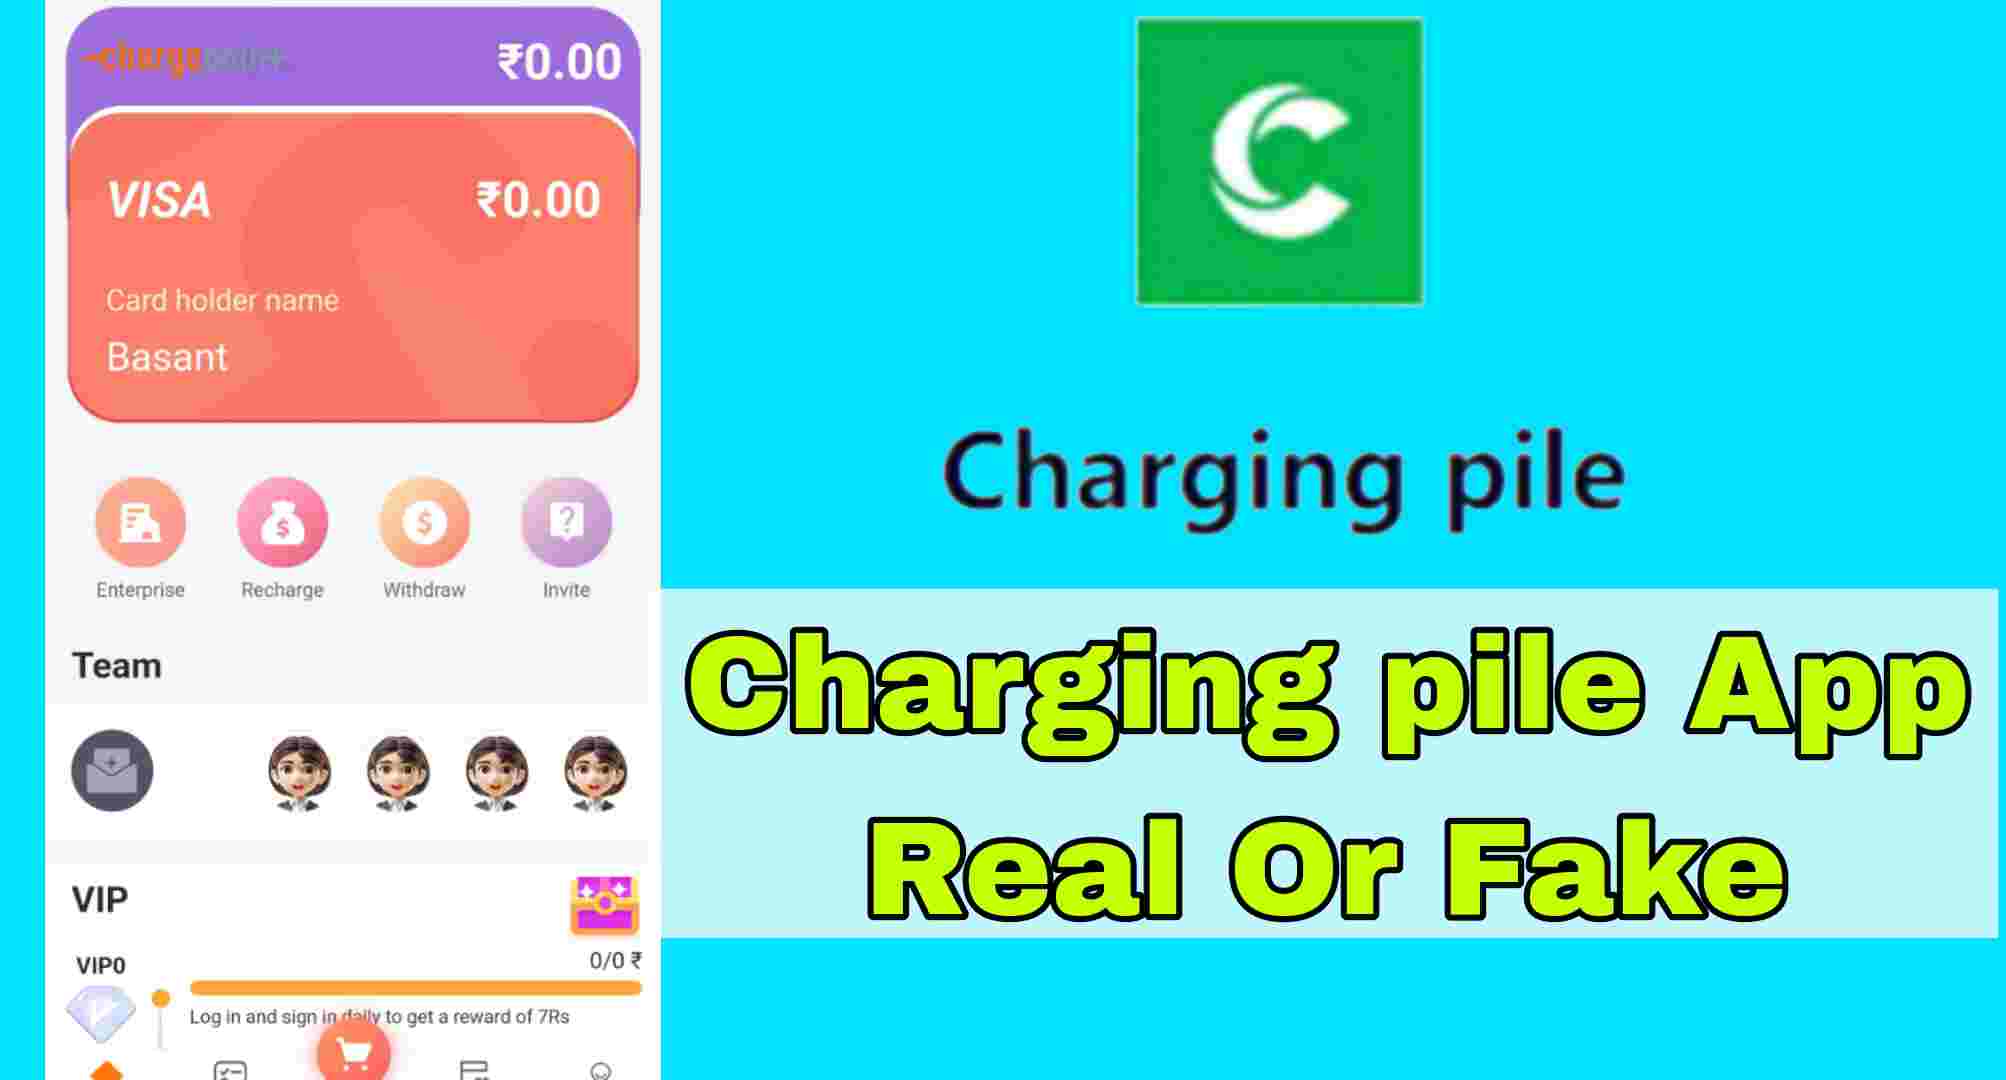 Charging pile App Real Or Fake